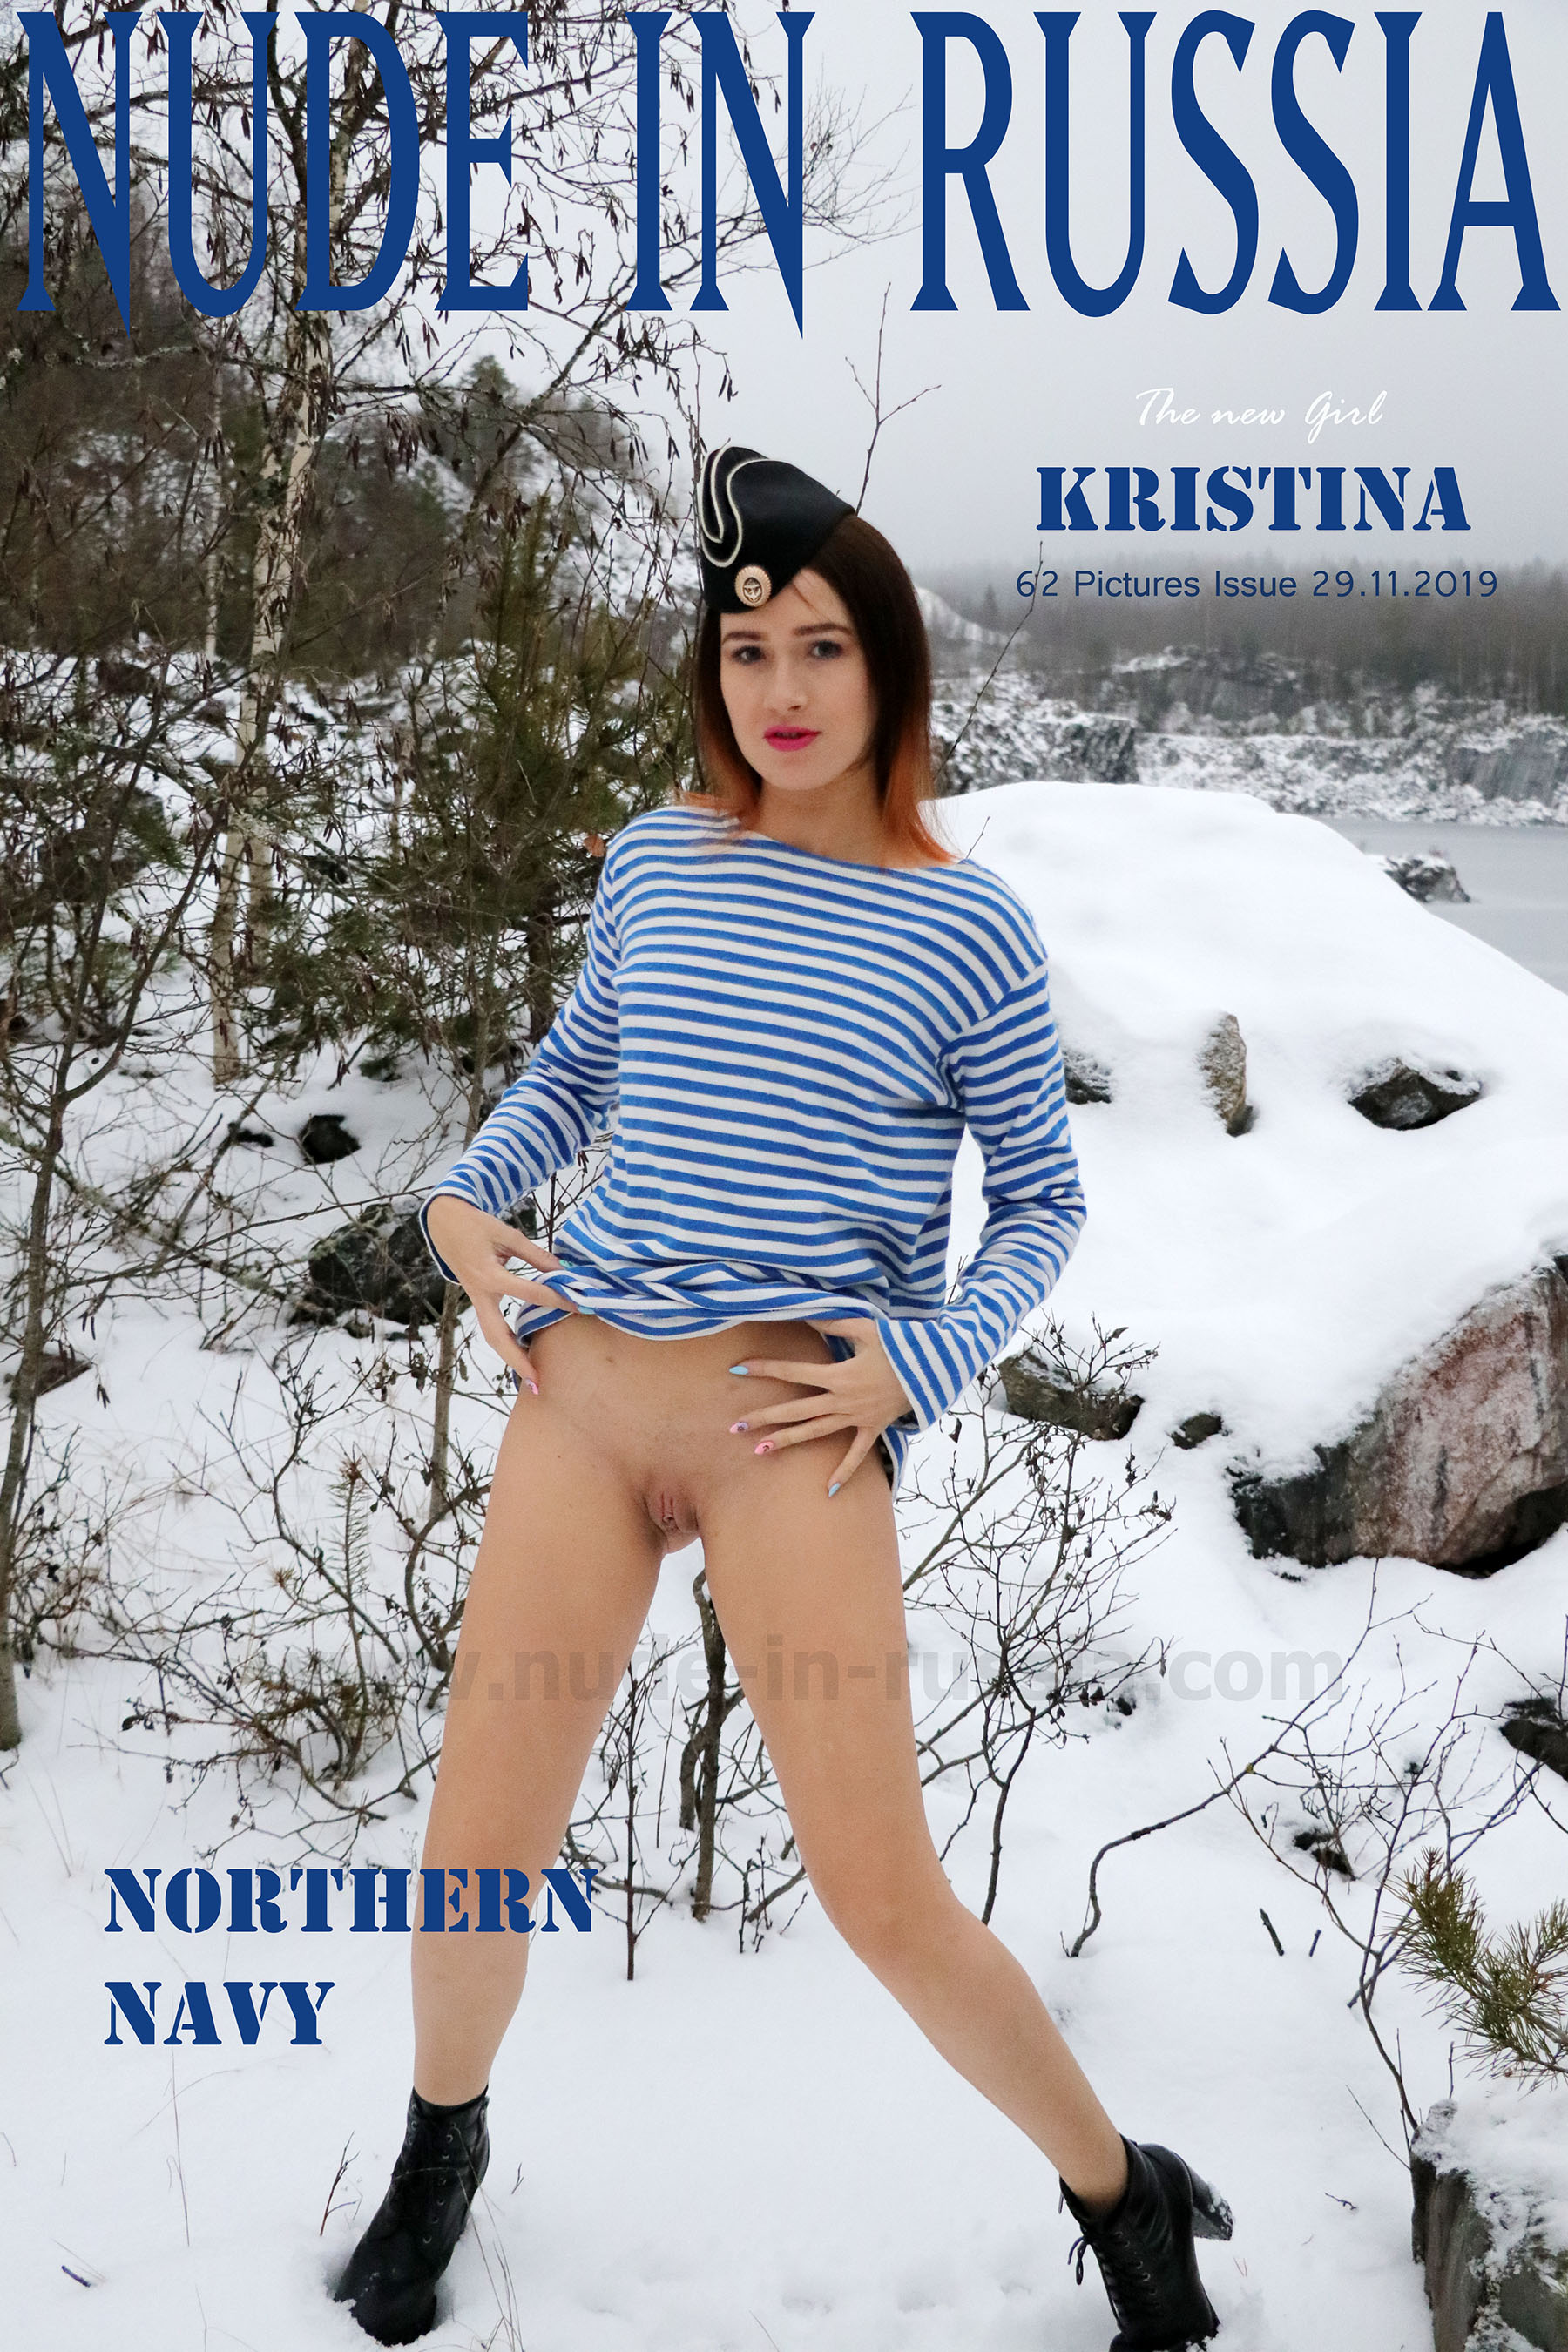 NIR-2019-11-29 - Kristina S - New Girl - Northe (1).jpg